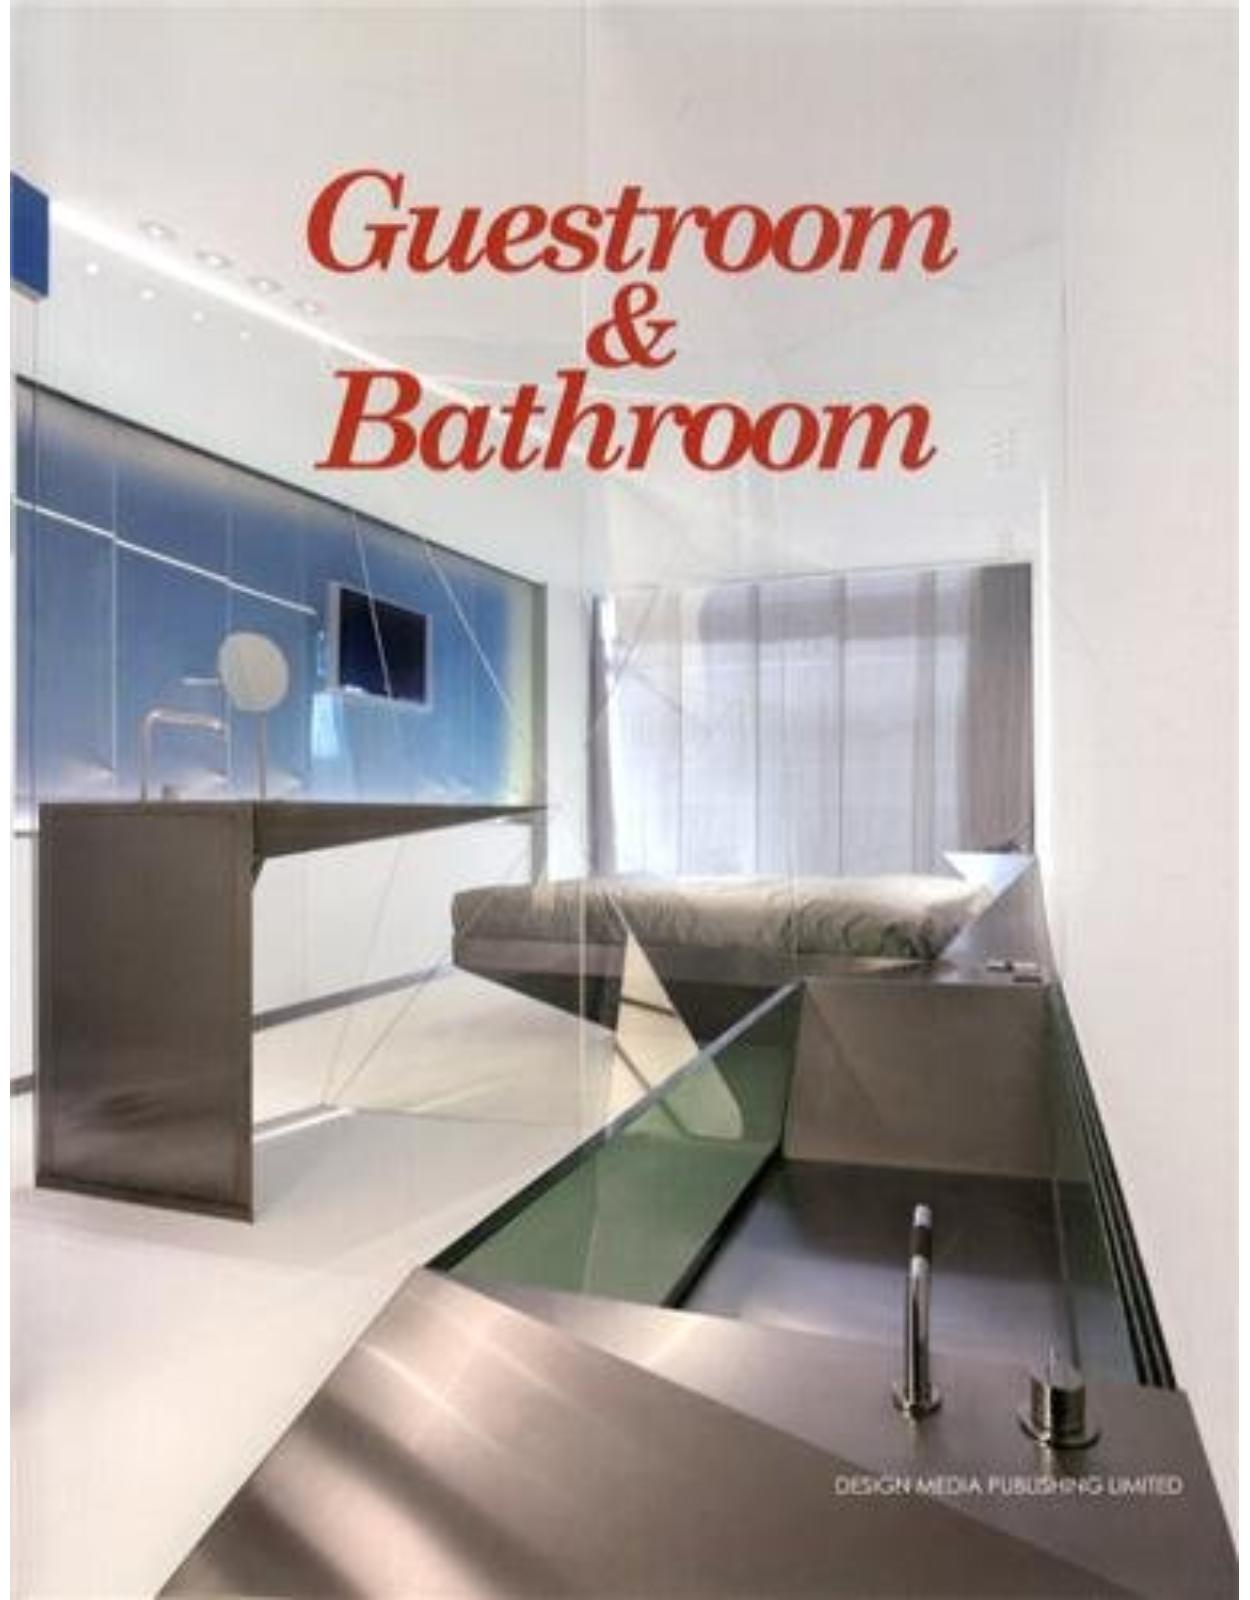 Guestroom and Bathroom